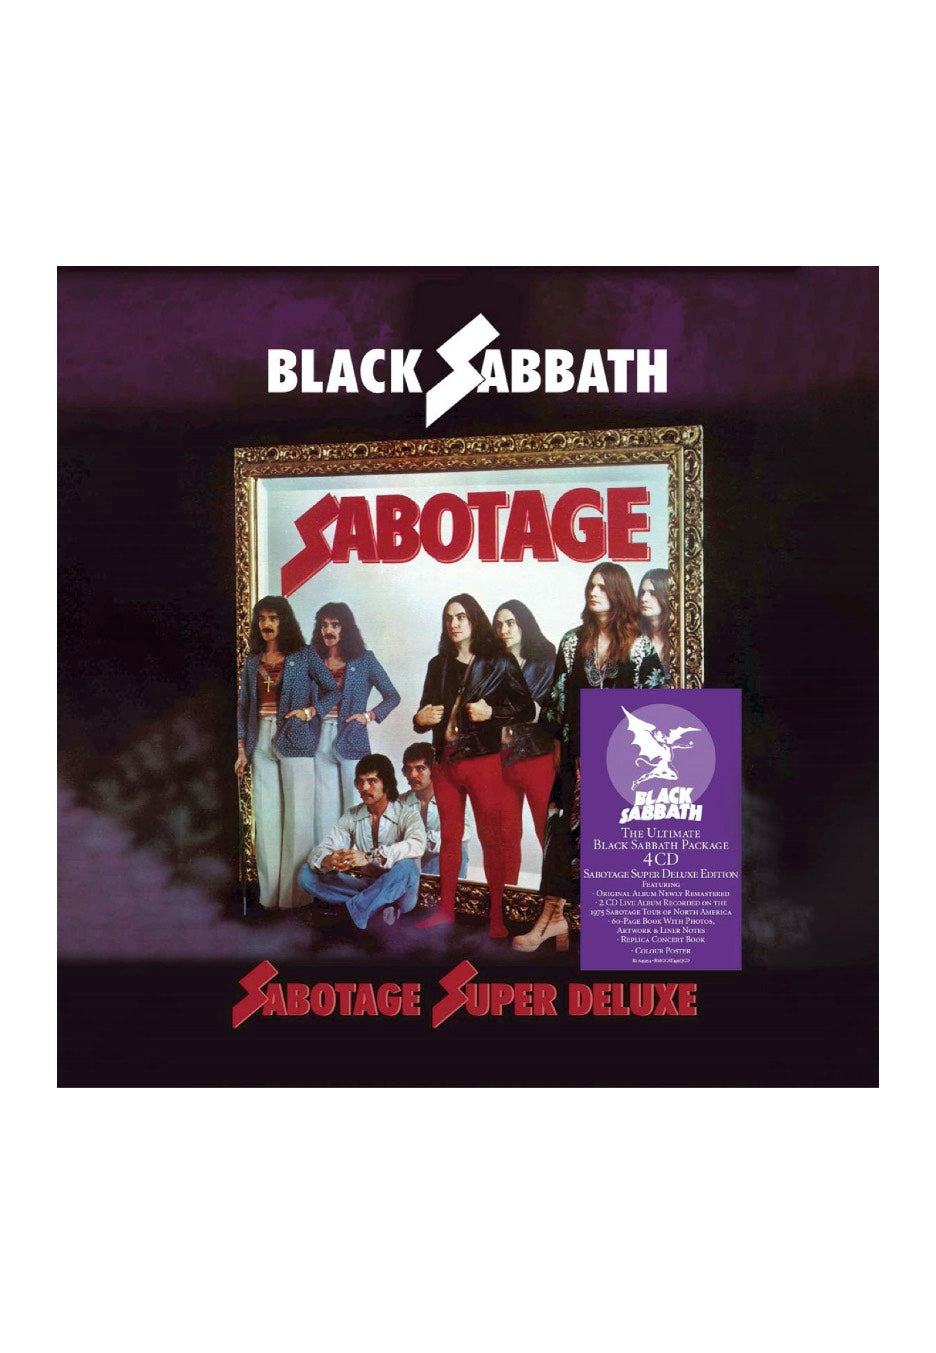 Black Sabbath - Sabotage (Super Deluxe) - CD Box